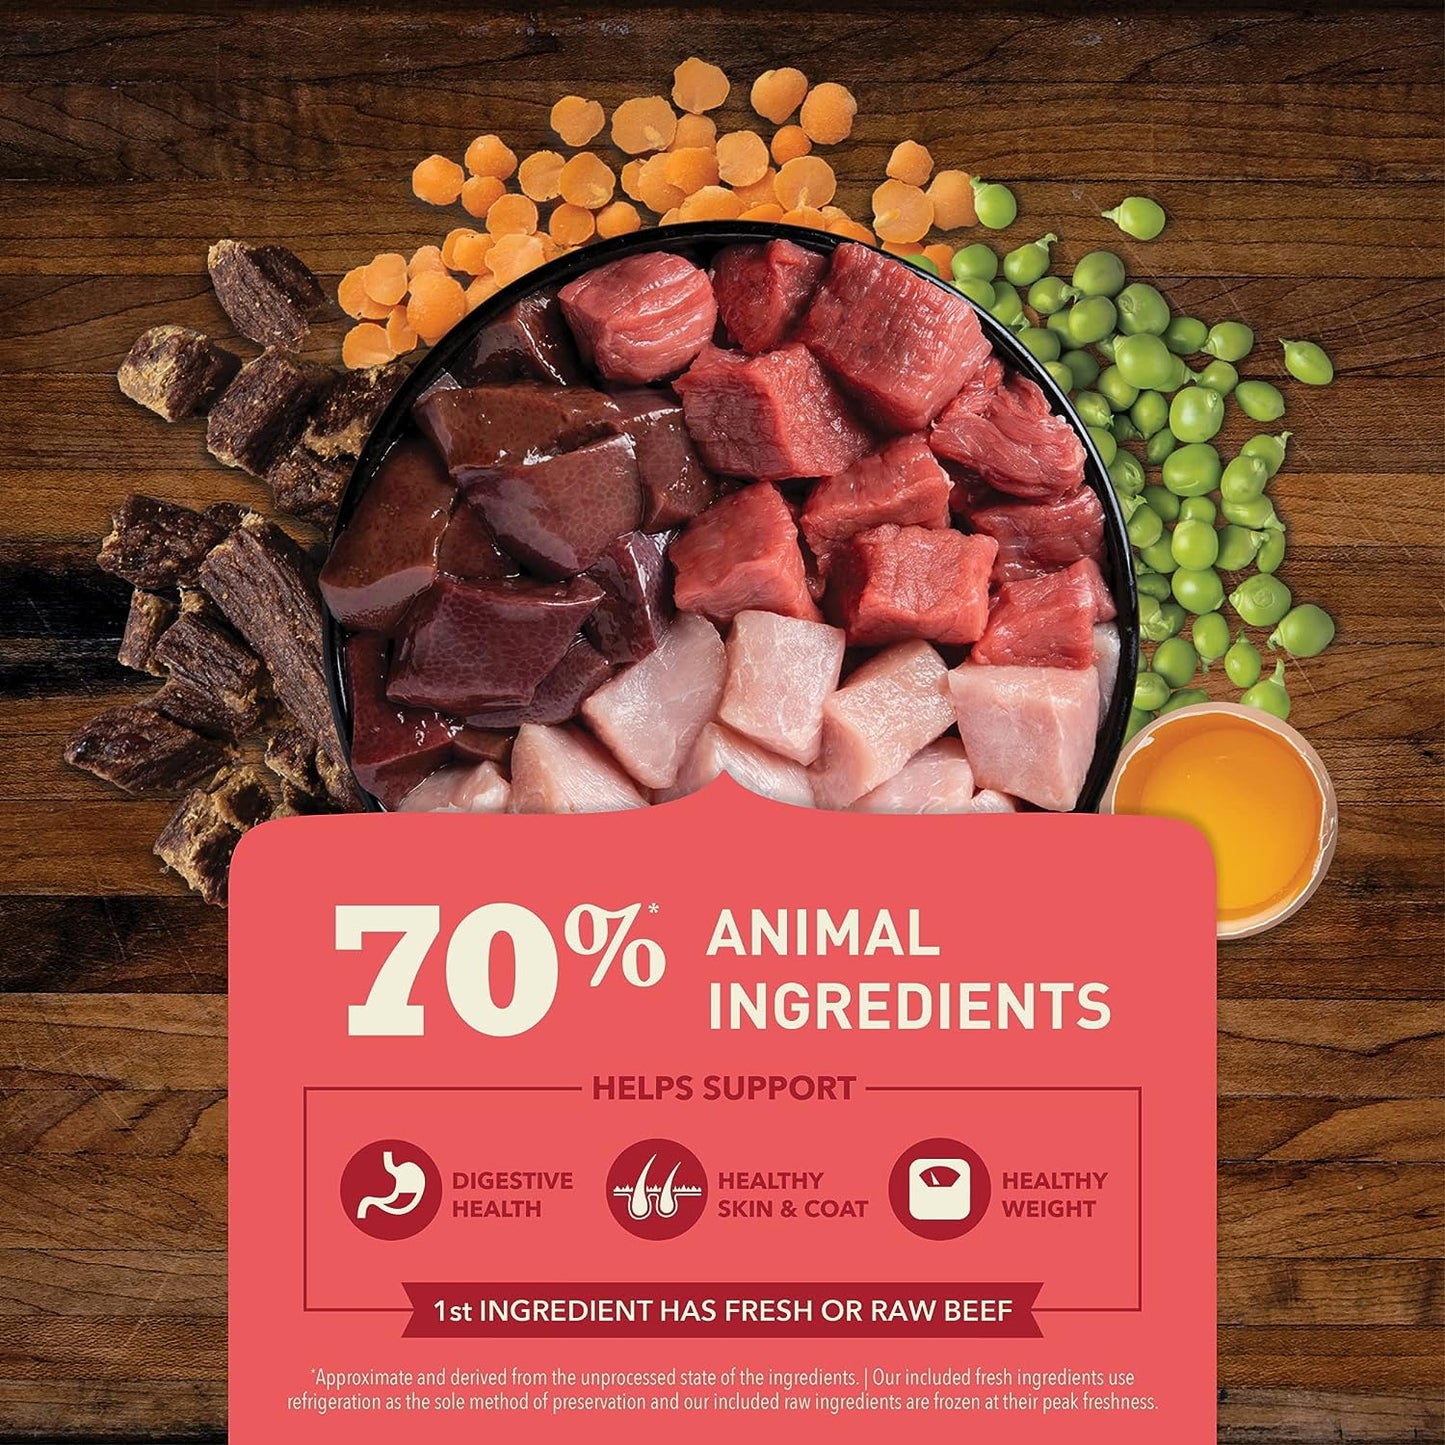 Acana Butcher's Favorites™ Farm-Raised Beef & Liver Recipe , Dry Dog Food